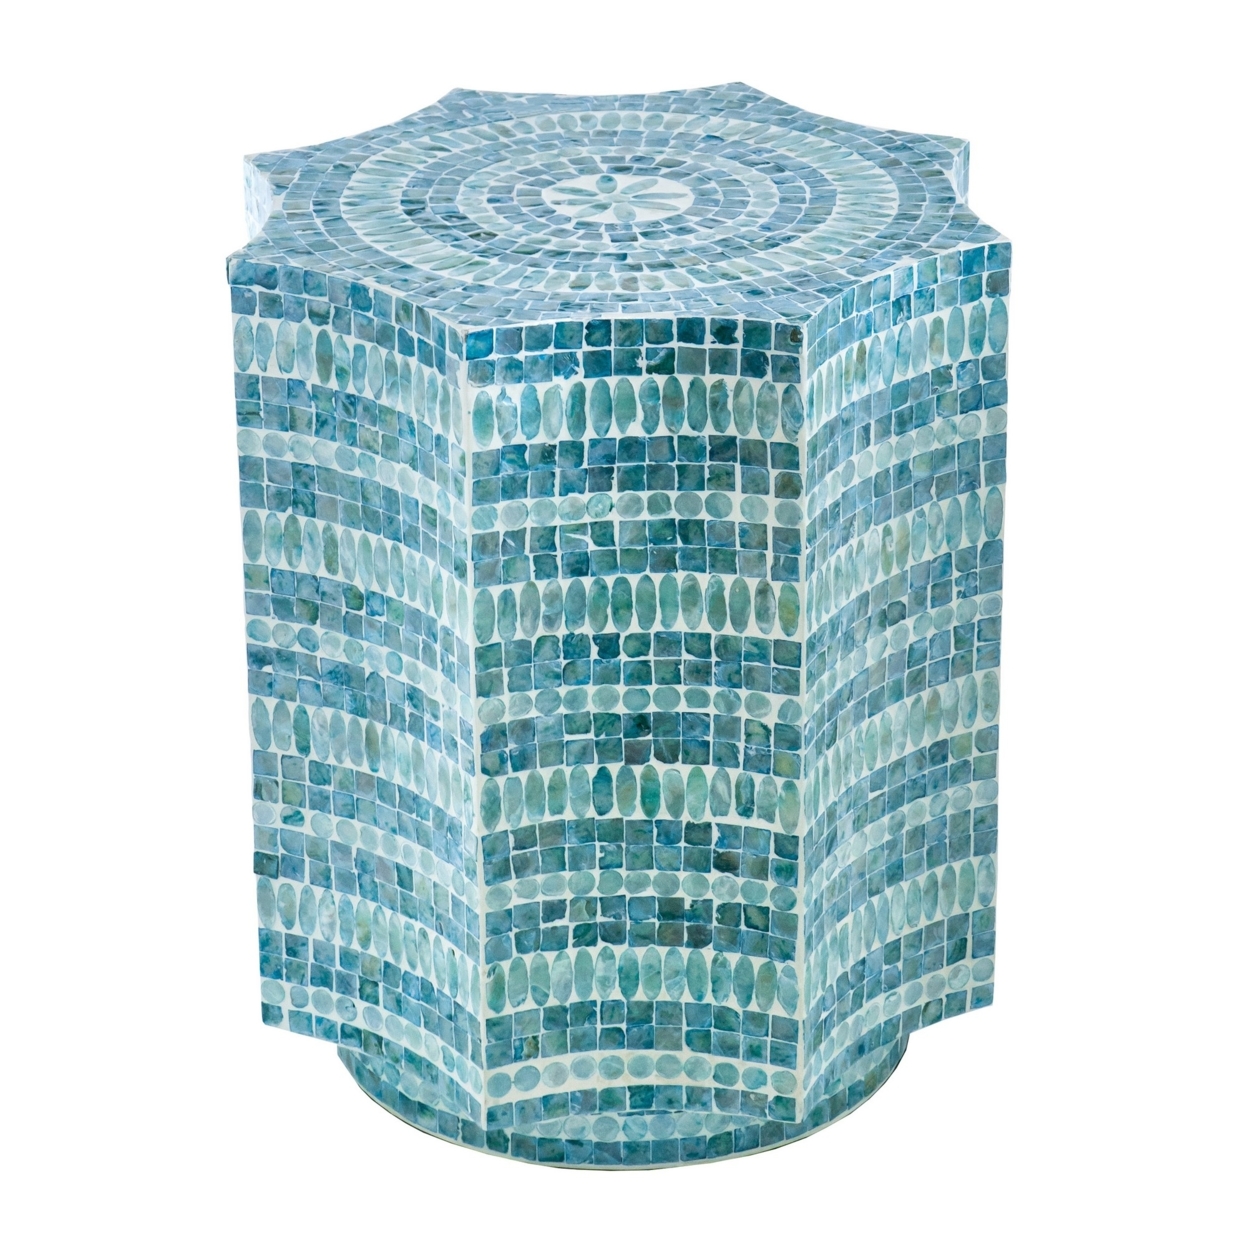 20 Inch Stool Table, Capiz Shell Inlay, Floral Geometric Design, Turquoise, Saltoro Sherpi